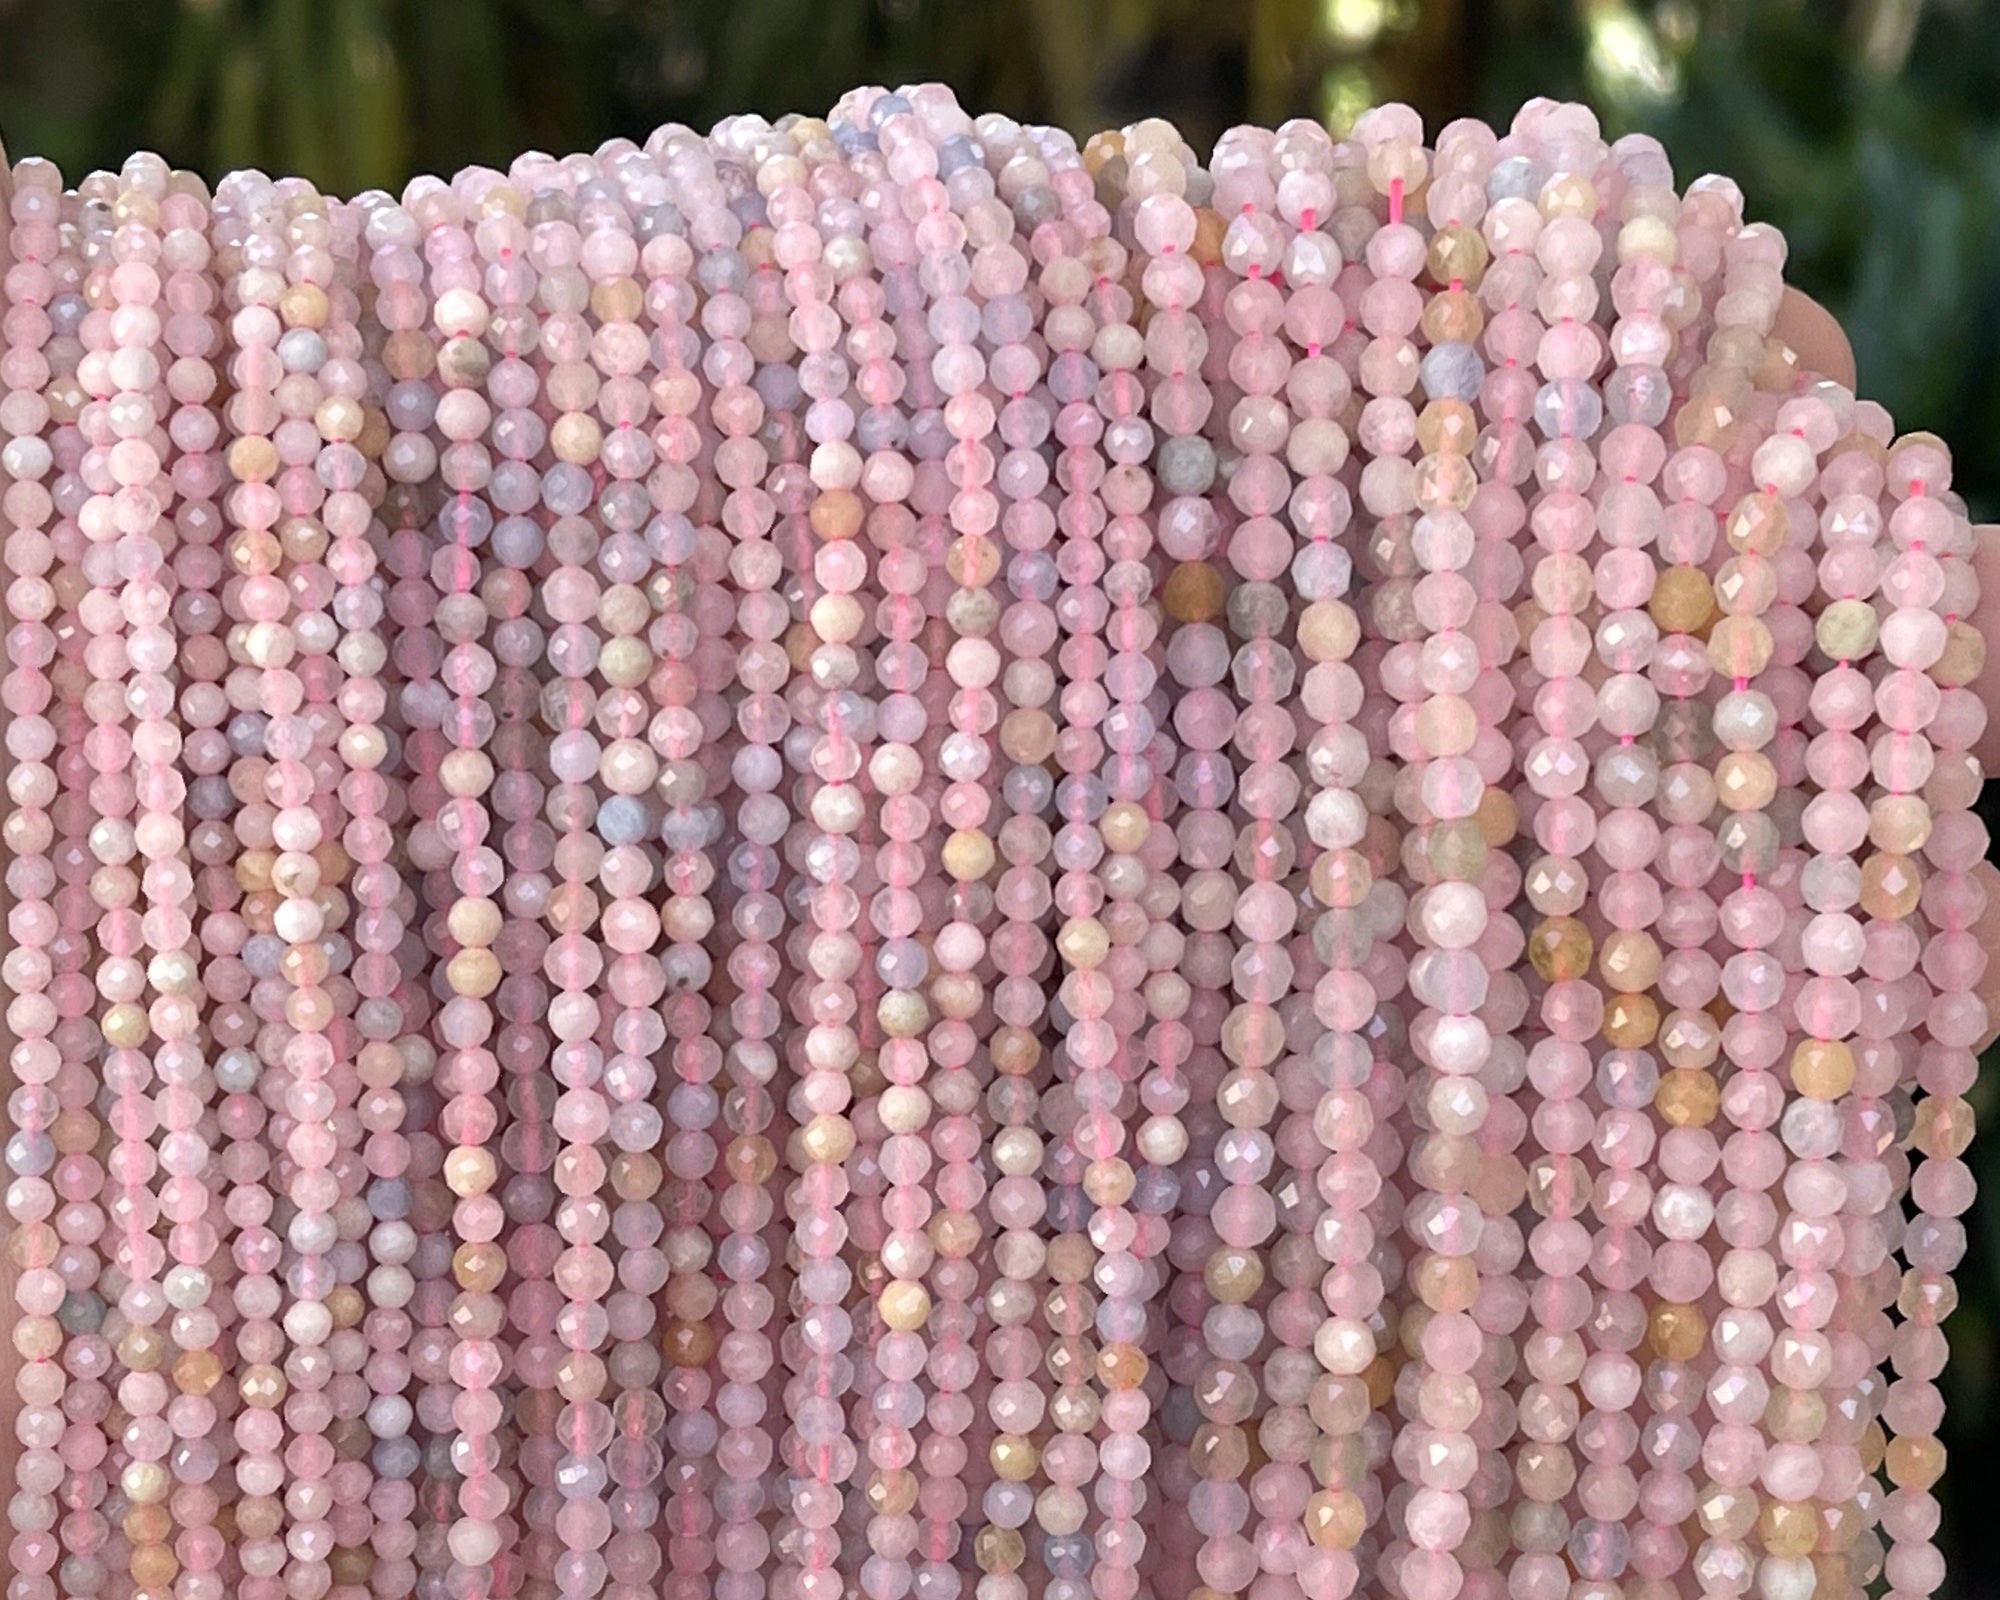 Morganite Beryl 3mm 4mm faceted round natural gemstone beads 15.5" strand - Oz Beads 